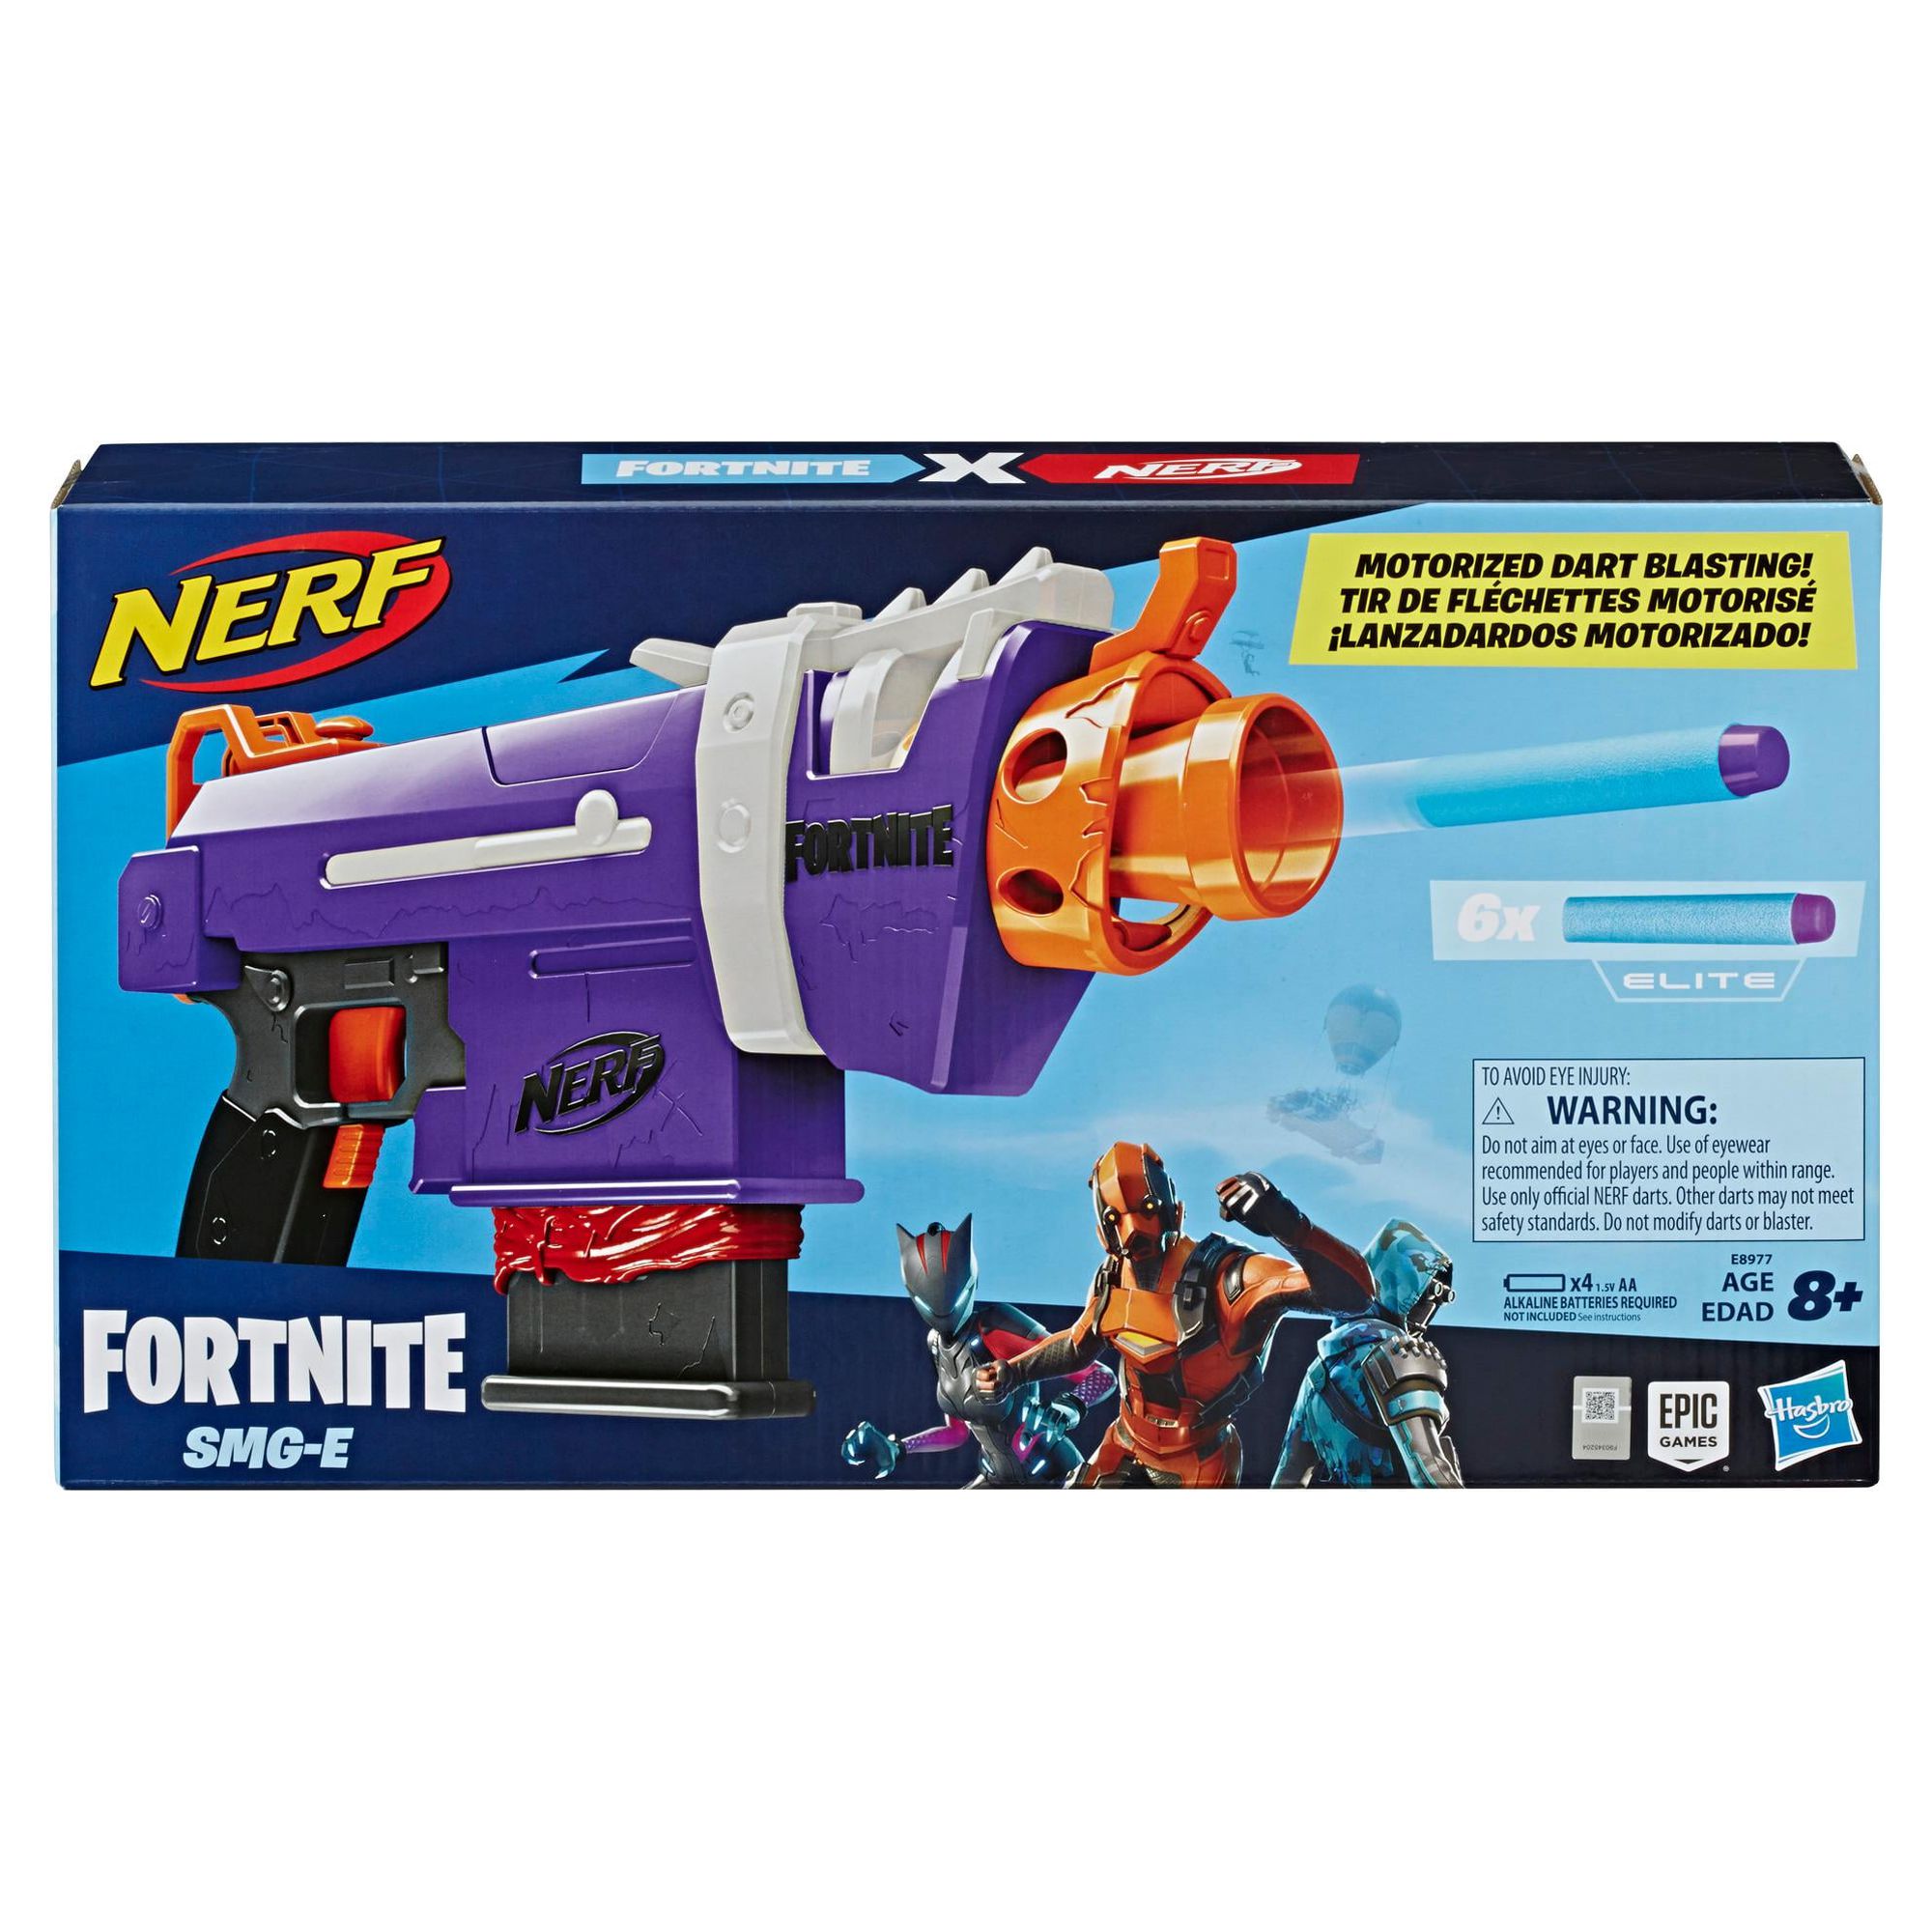 Nerf Fortnite Motorized Blaster with 6 Darts - image 3 of 3